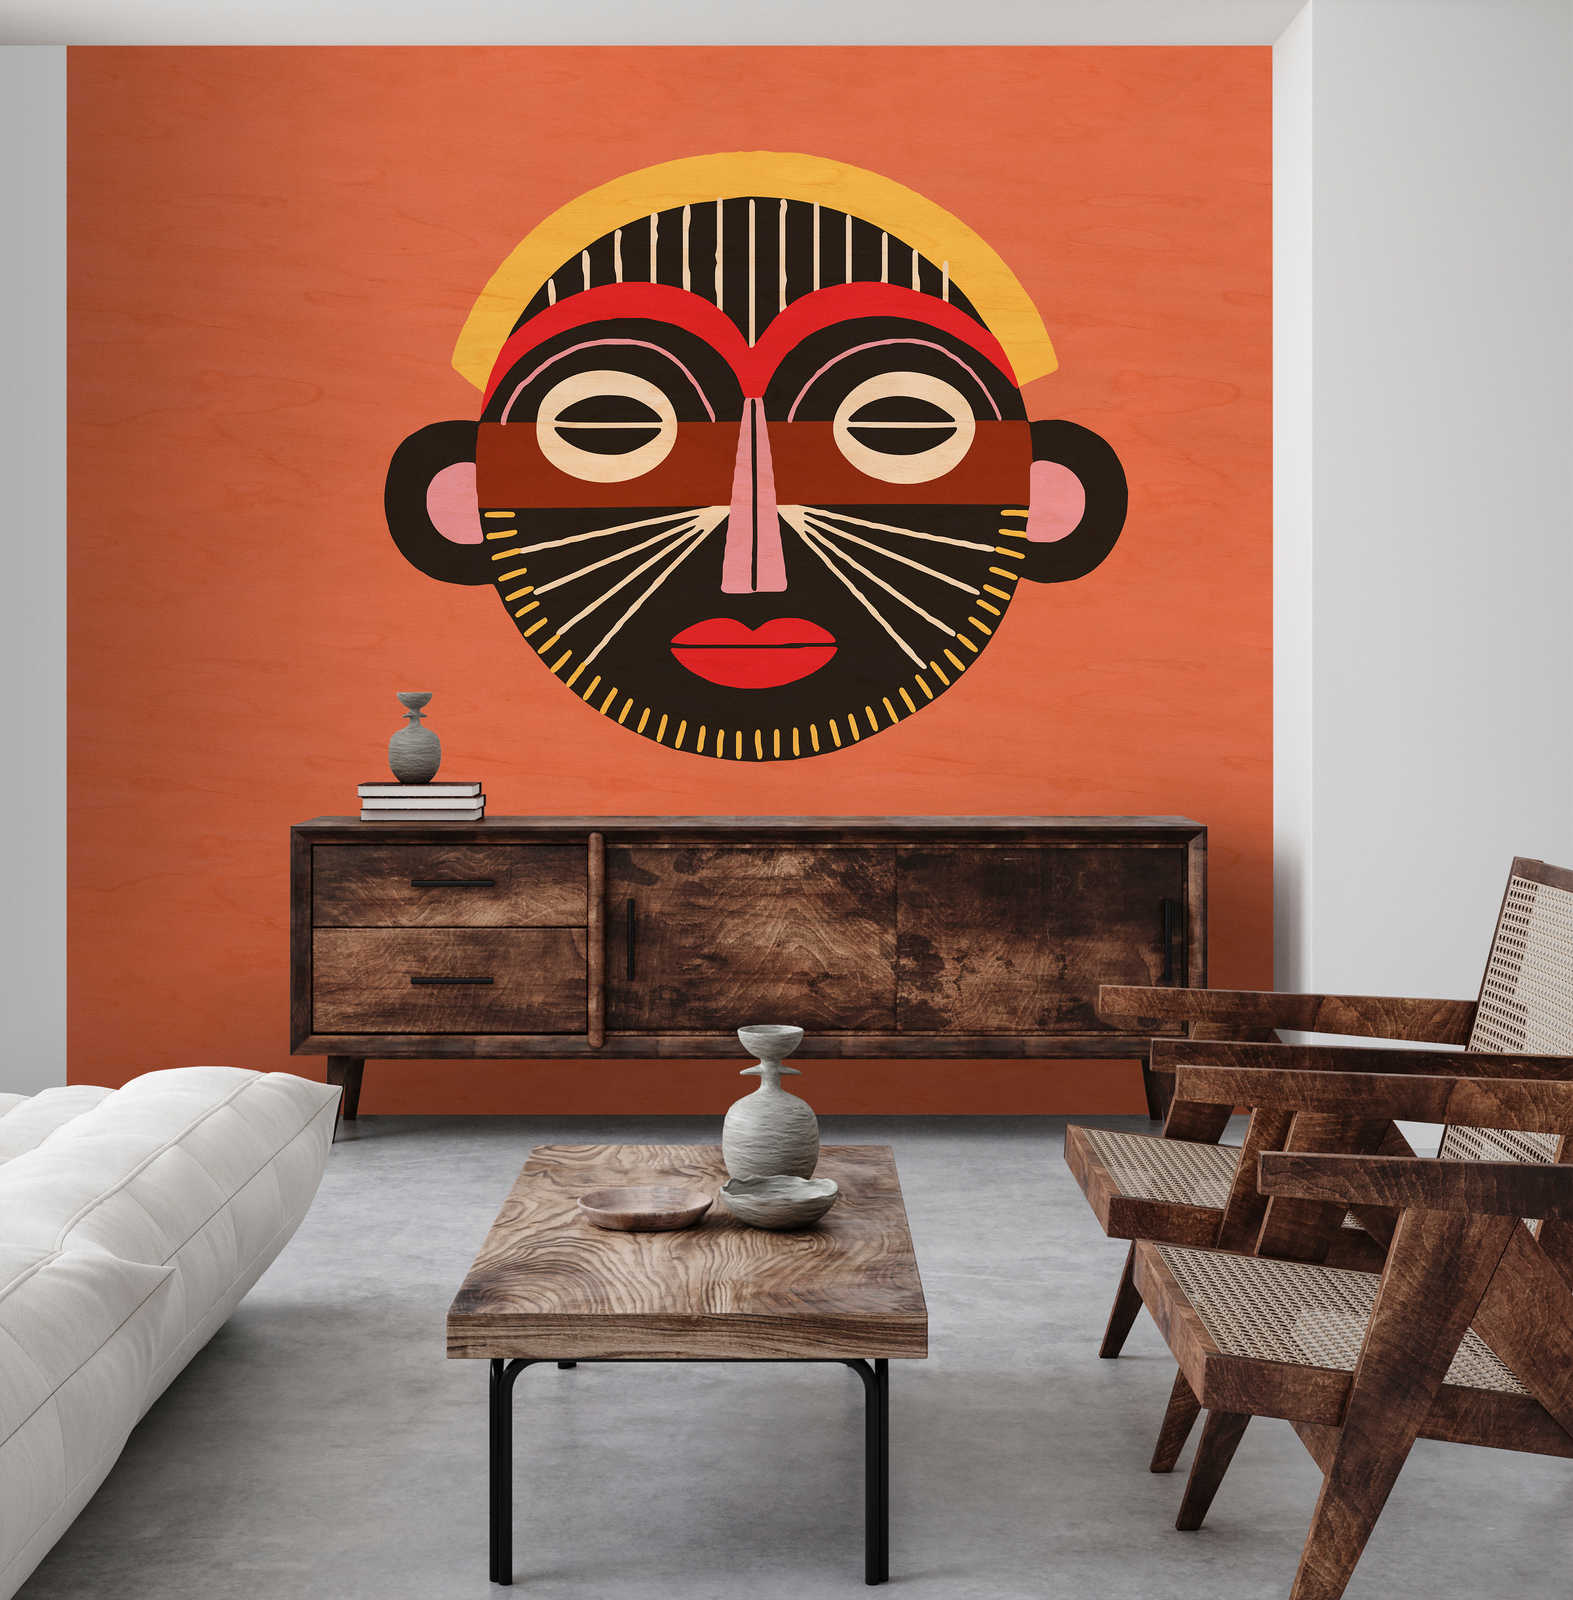             Overseas 2 - ethnic mural mask in tribal design
        